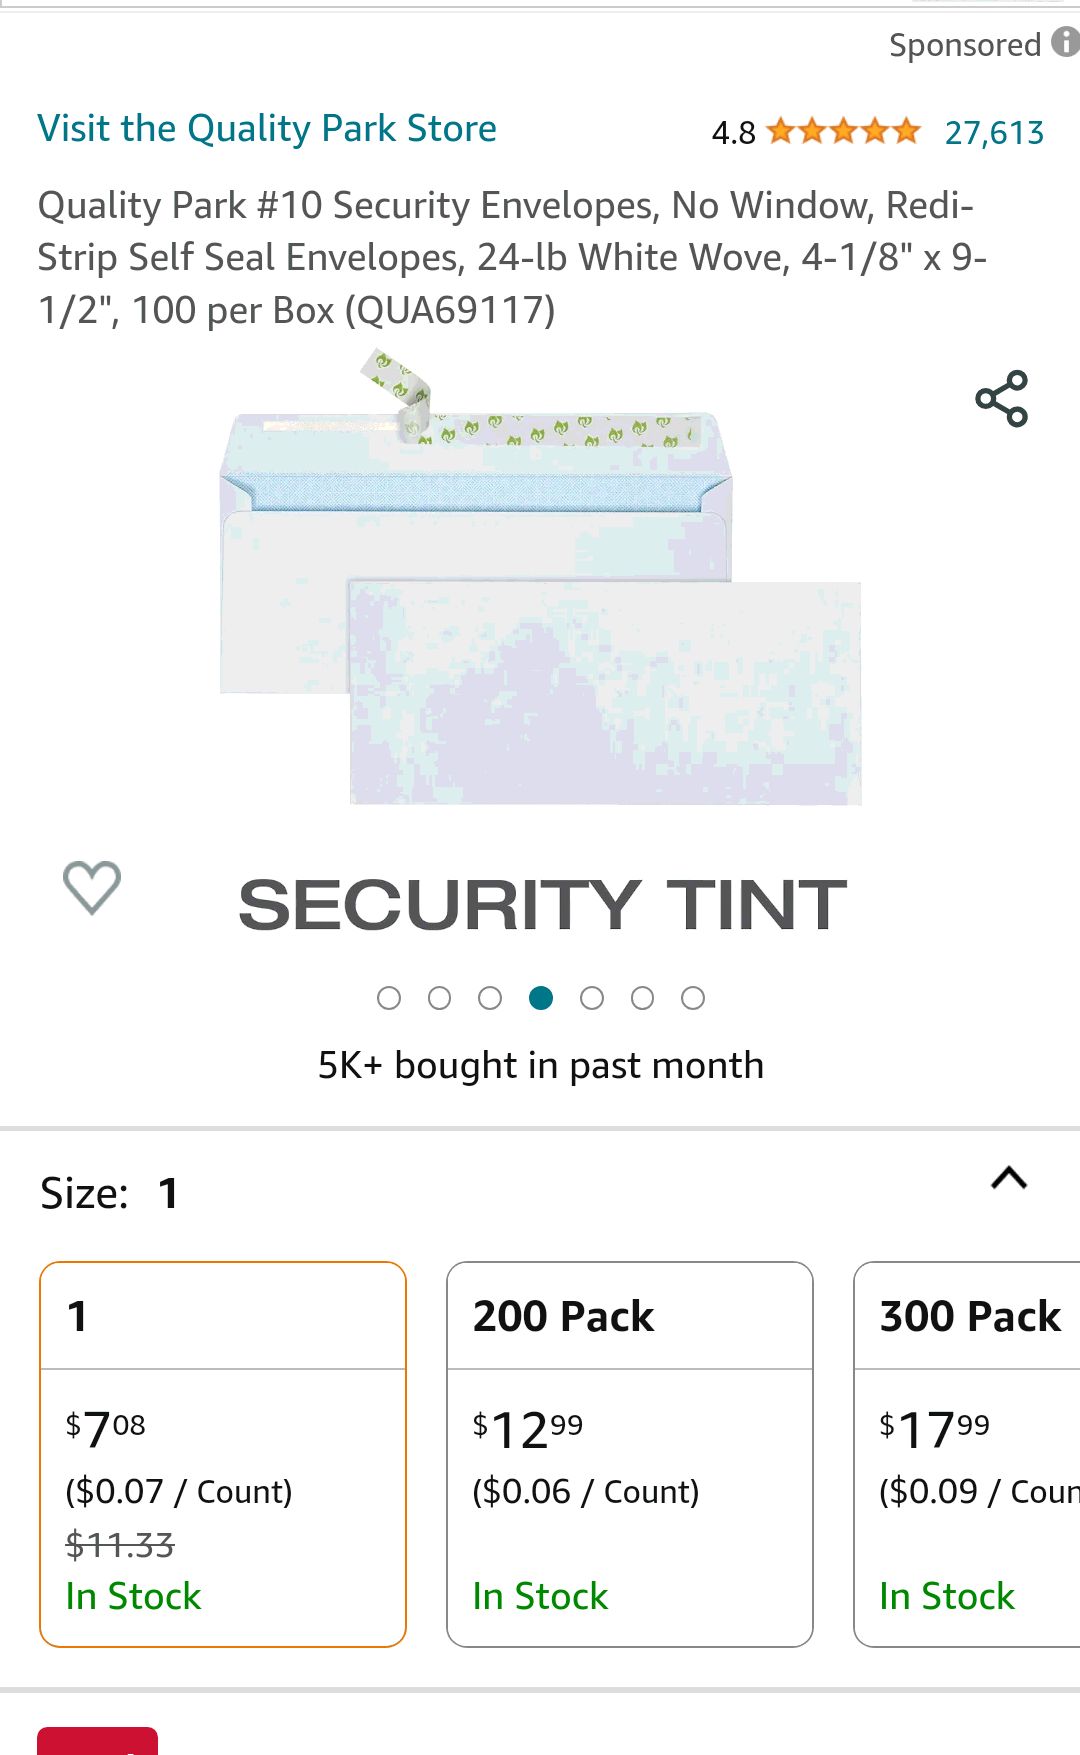 Amazon.com : Quality Park #10 Security Envelopes, No Window, Redi-Strip Self Seal Envelopes, 24-lb White Wove, 4-1/8" x 9-1/2", 100 per Box (QUA69117) : Office Products